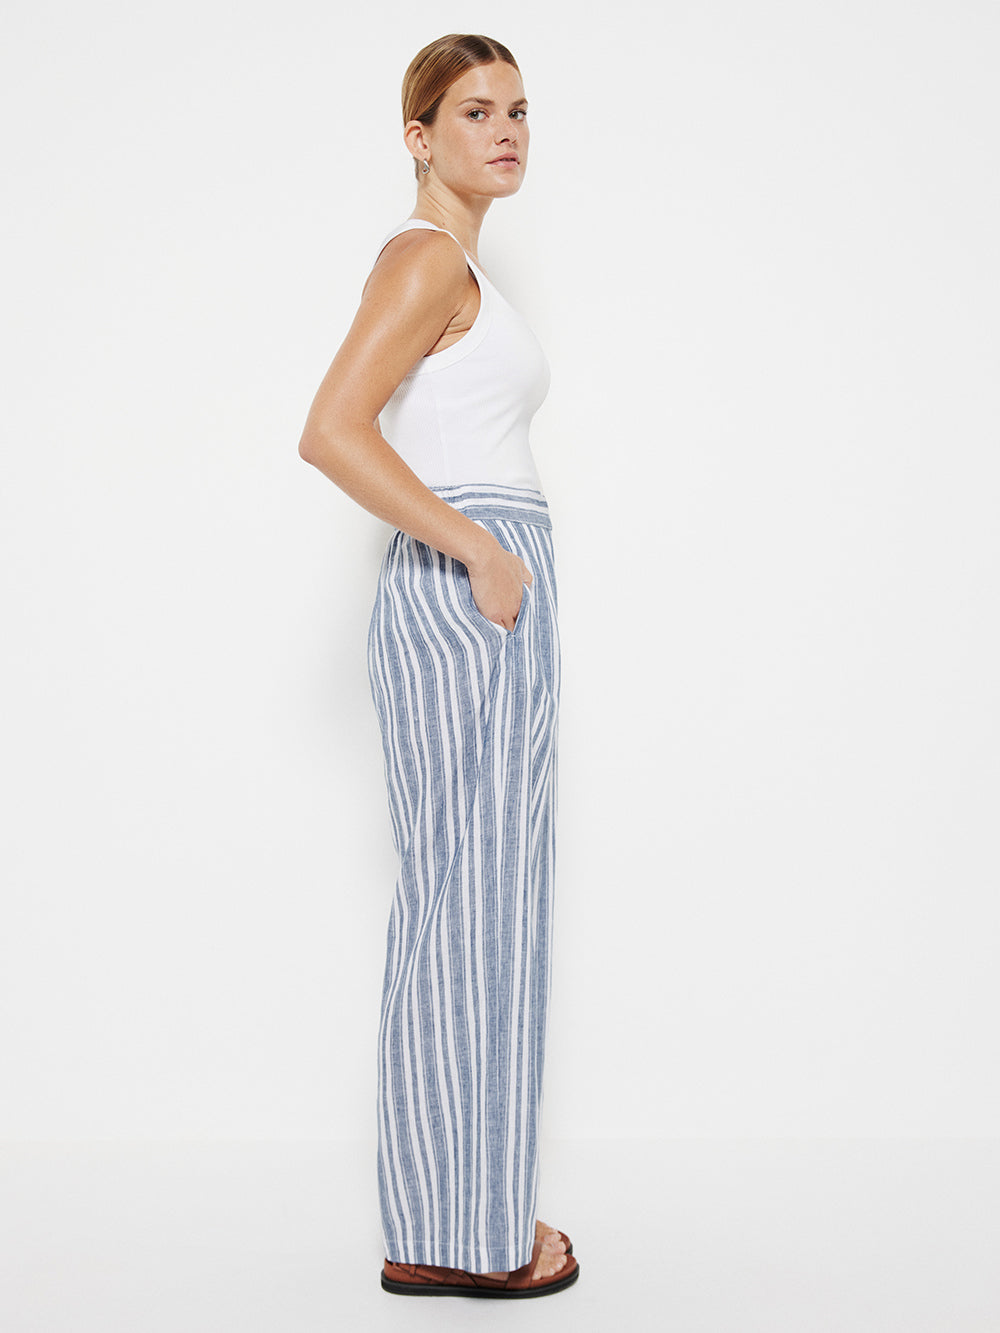 The Resort Stripe Linen Pant